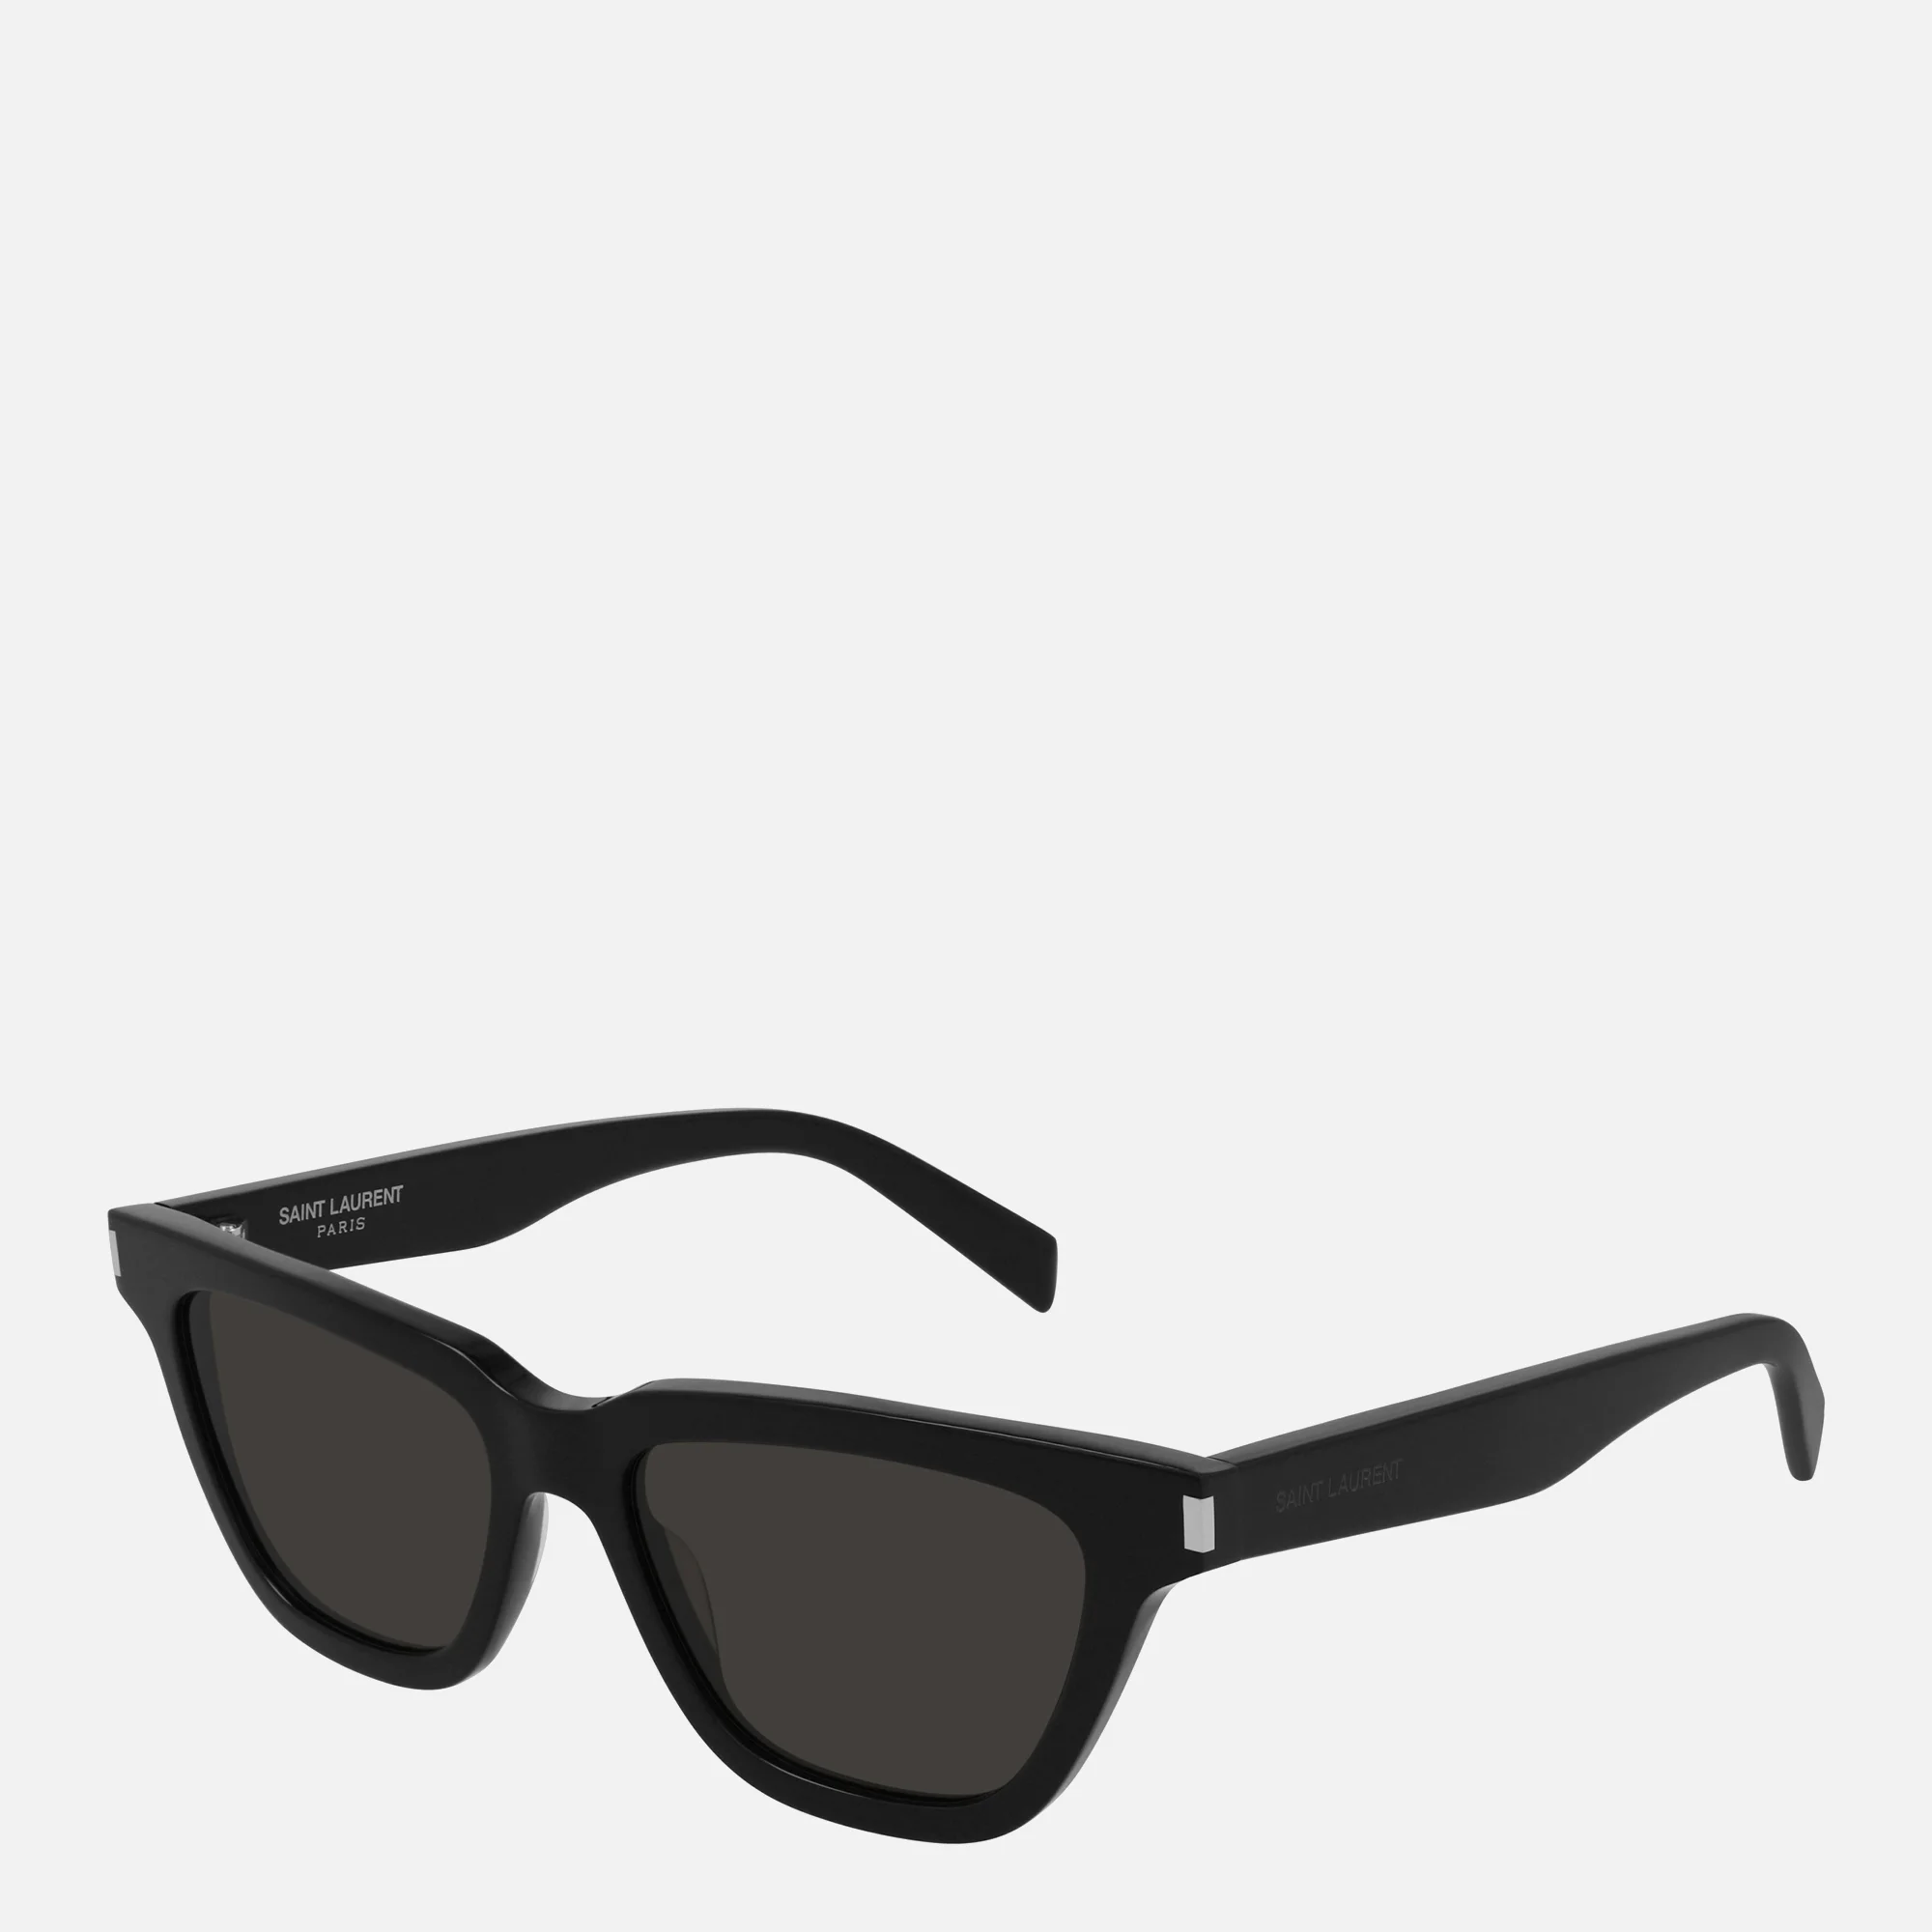 Saint Laurent Women's Sulpice Cateye Sunglasses - BLACK Image 1